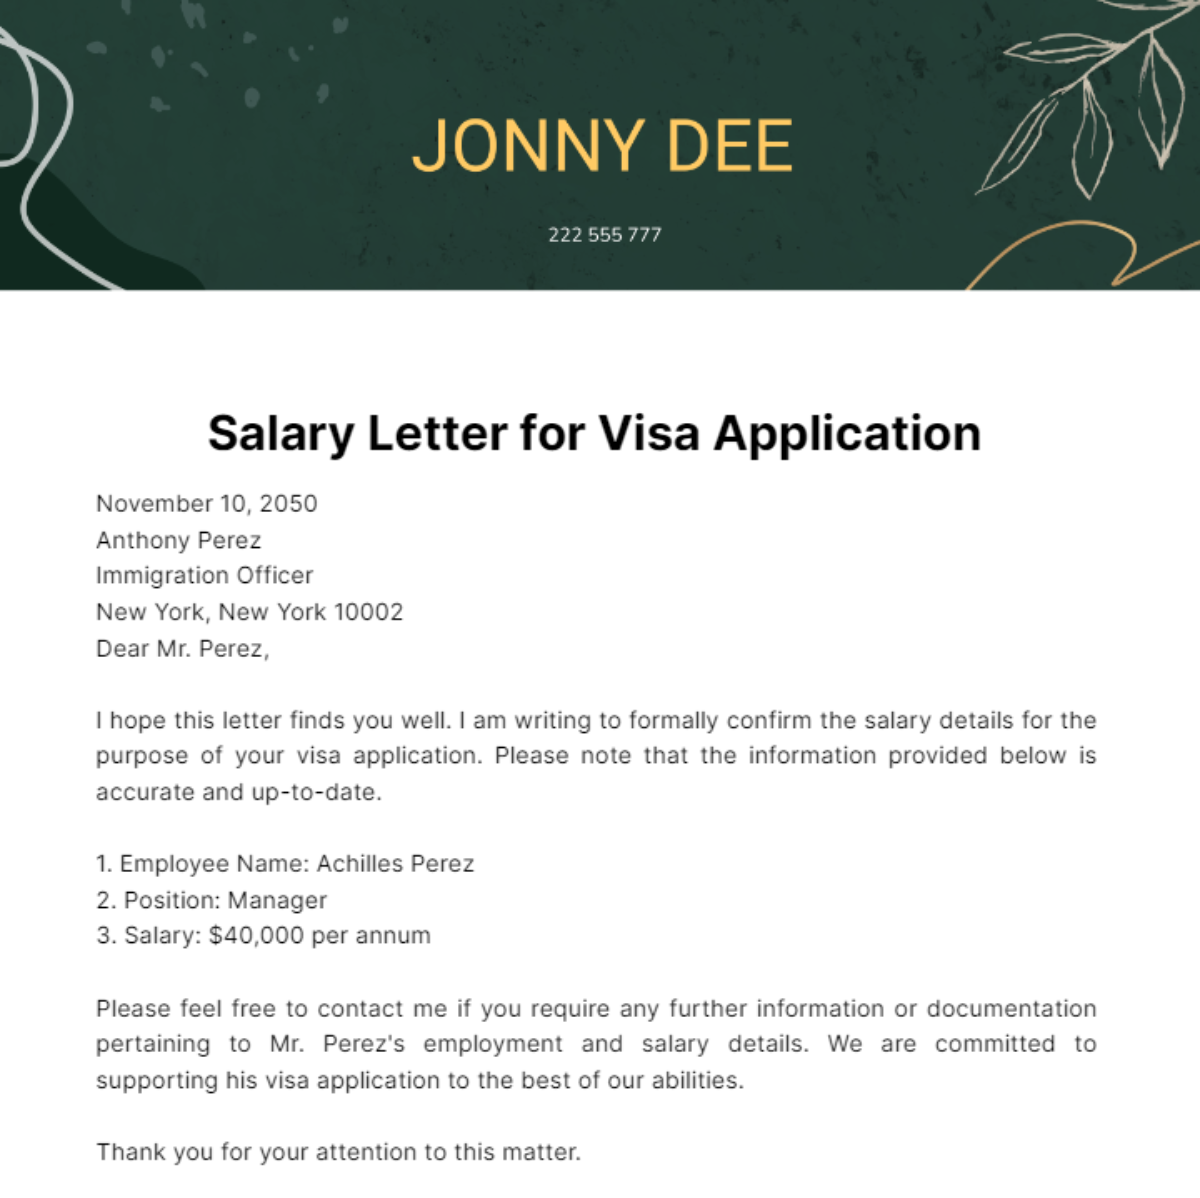 Salary Letter for Visa Application Template